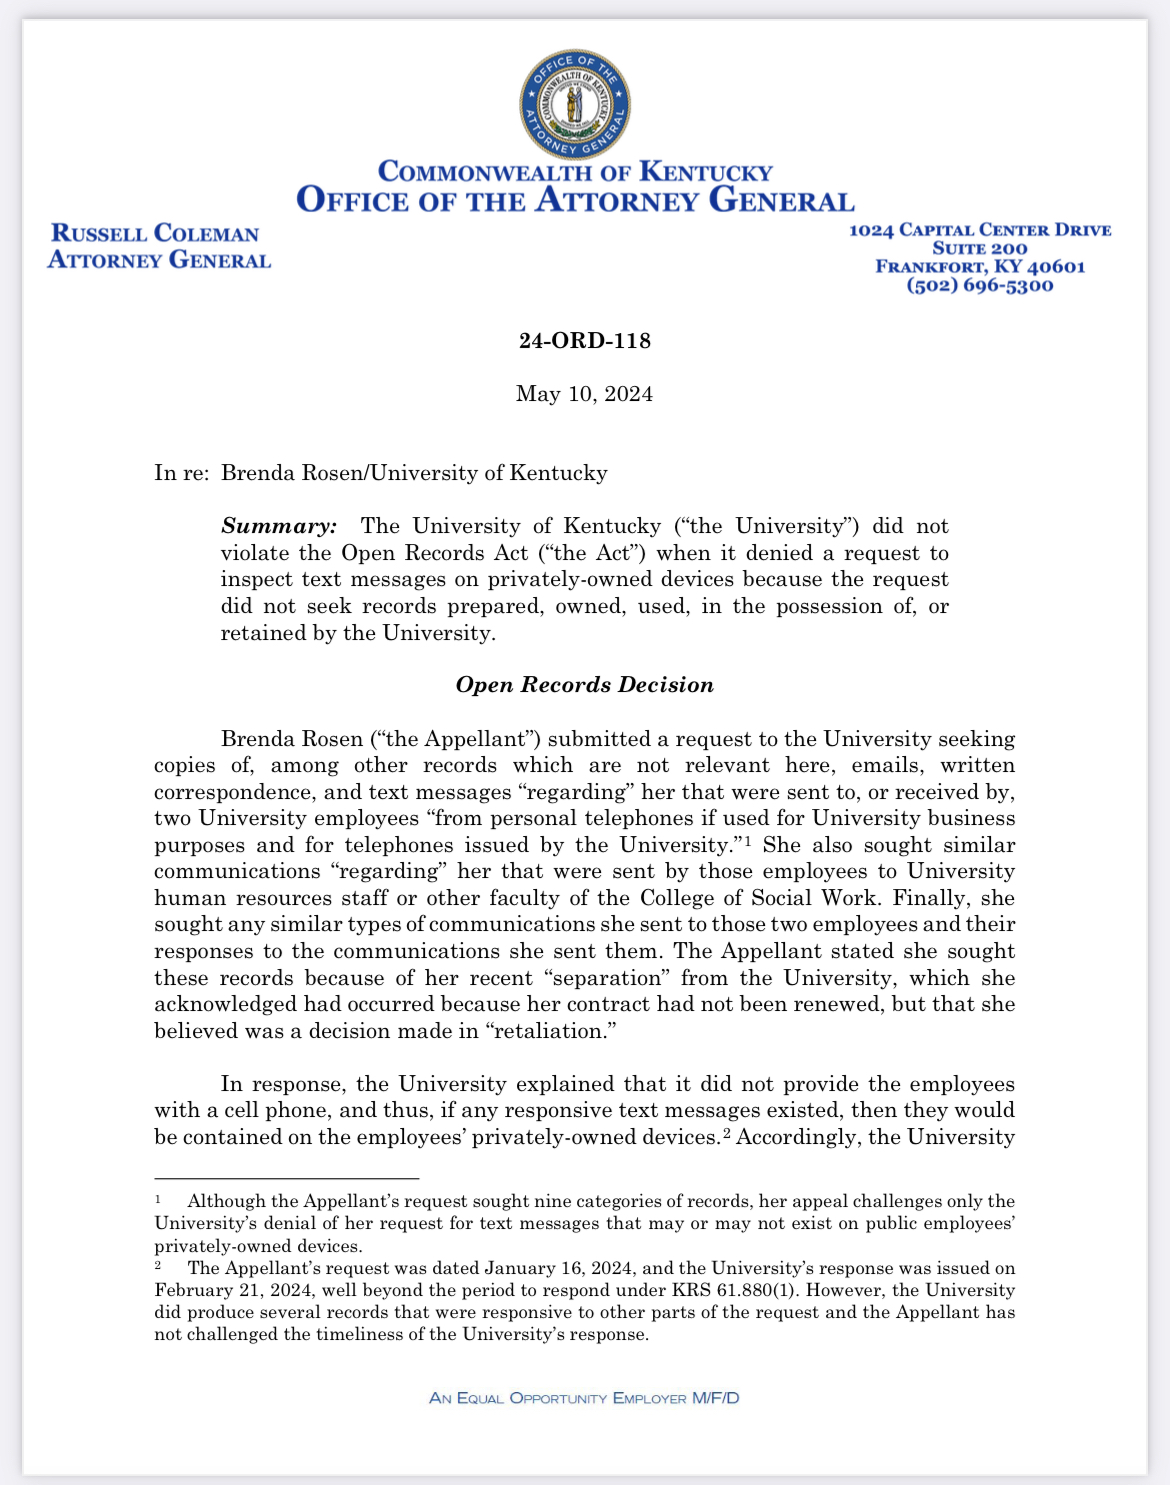 Attorney General's open records decision 